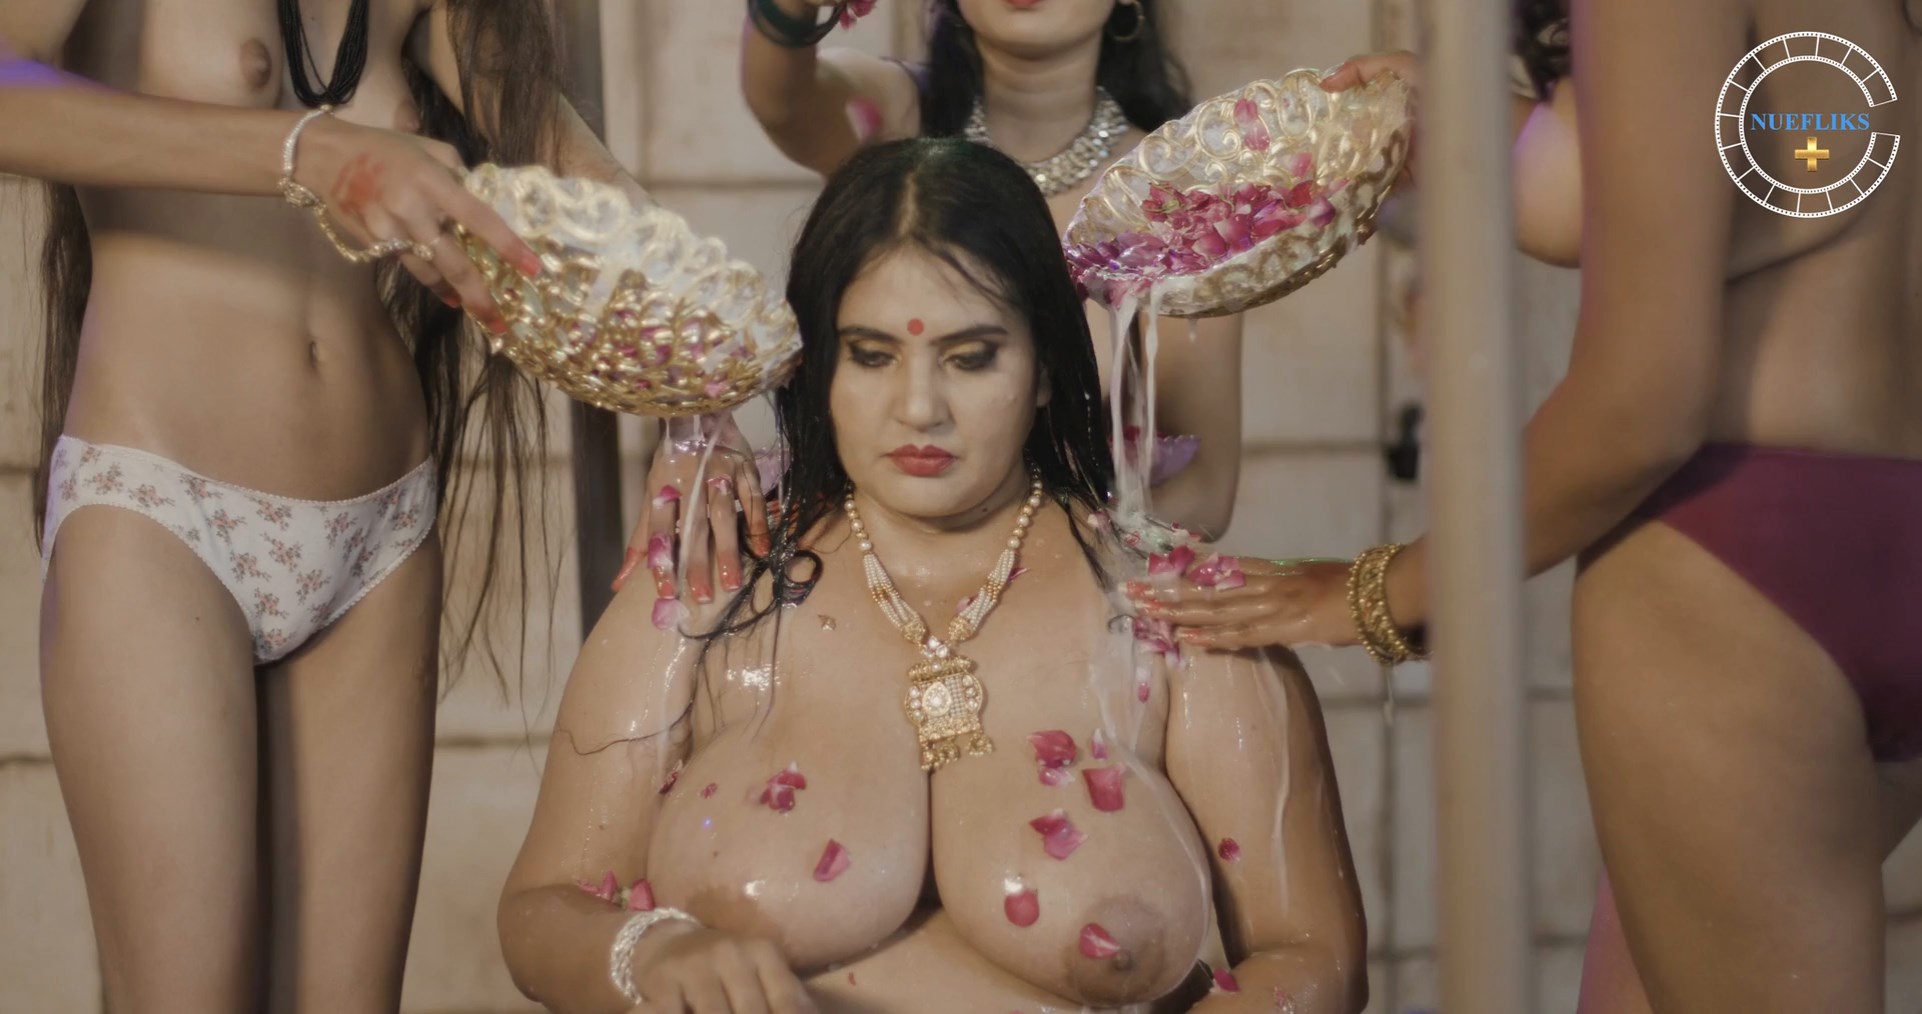 Indian porn web series name